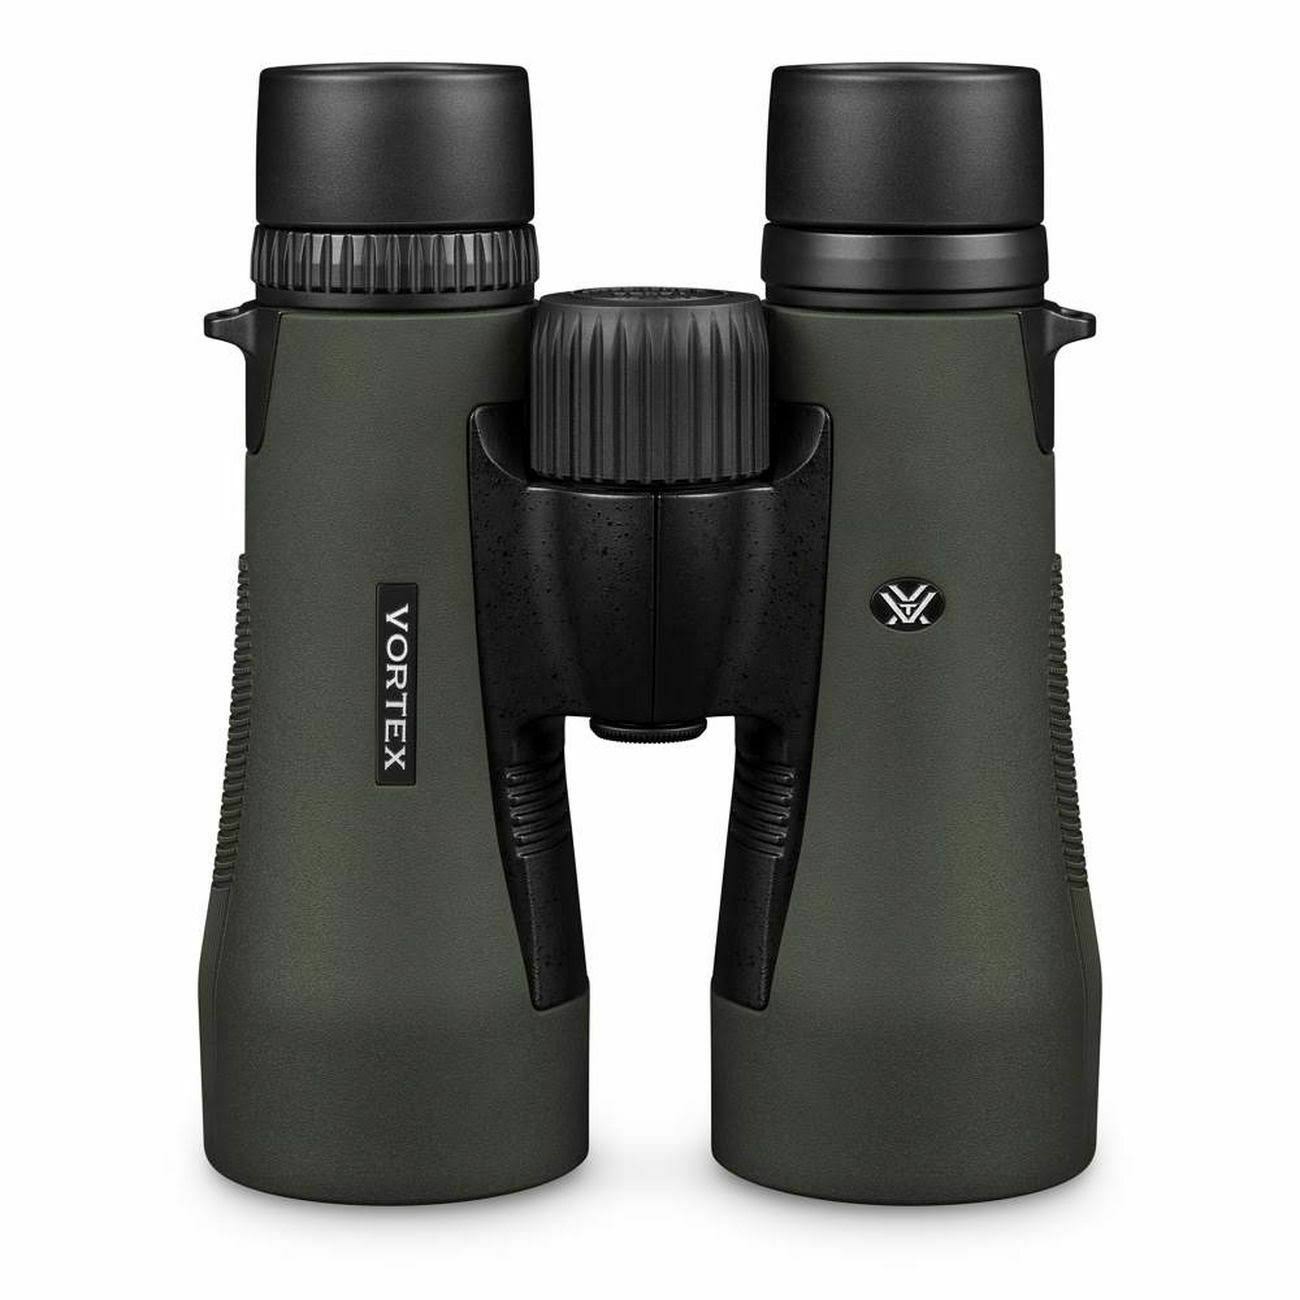 Vortex Diamondback Hd Compact Binoculars - 10x50, Green